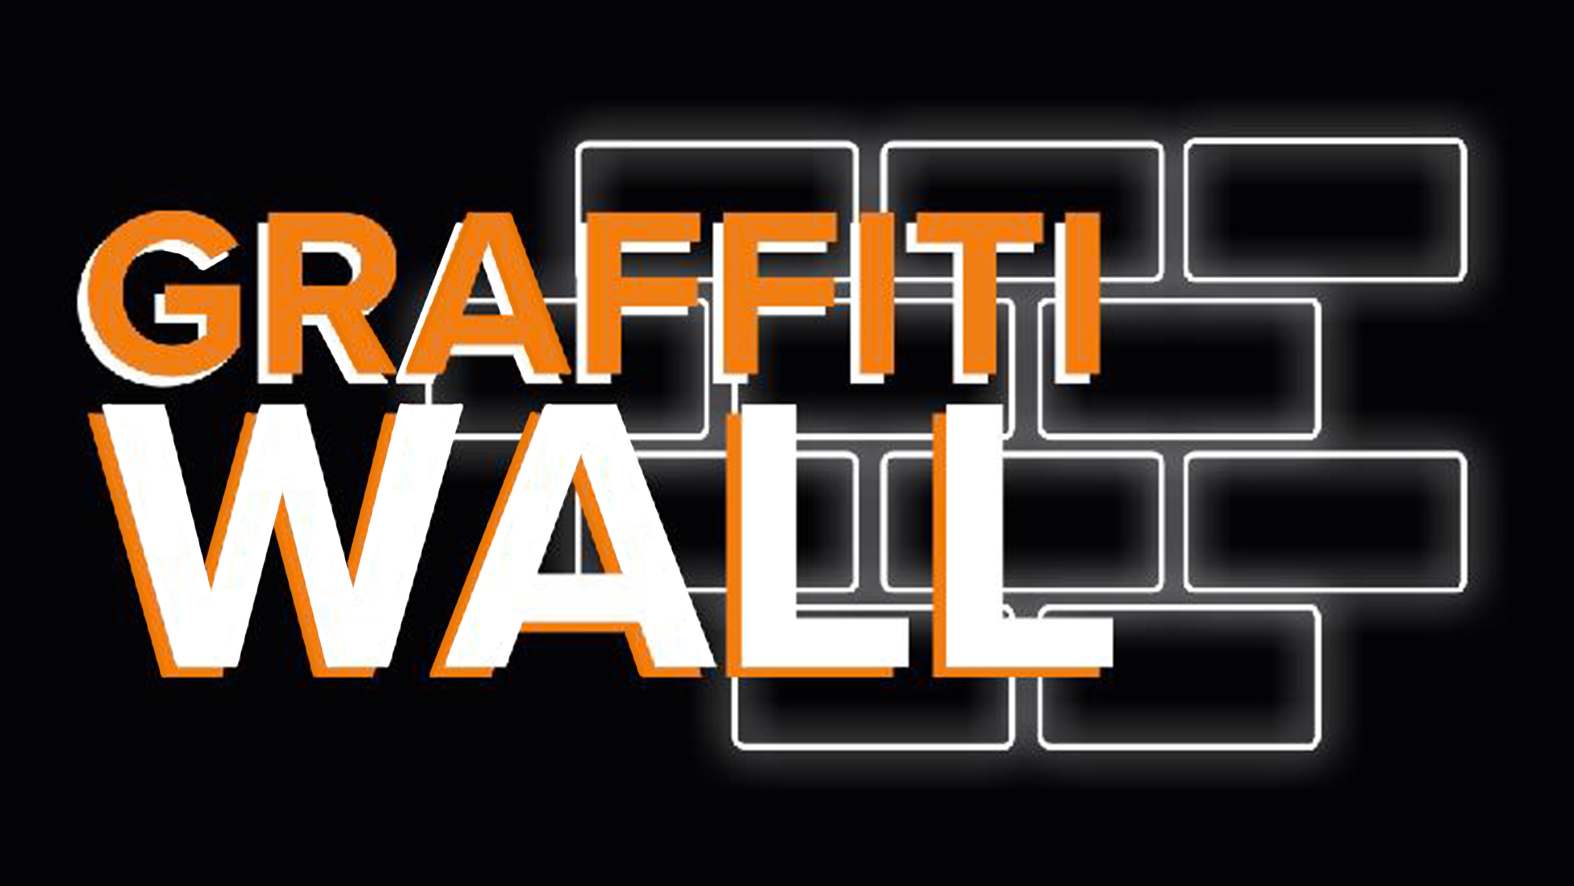 Digital Graffiti Wall Hire | Video Wall London | The Pod Group